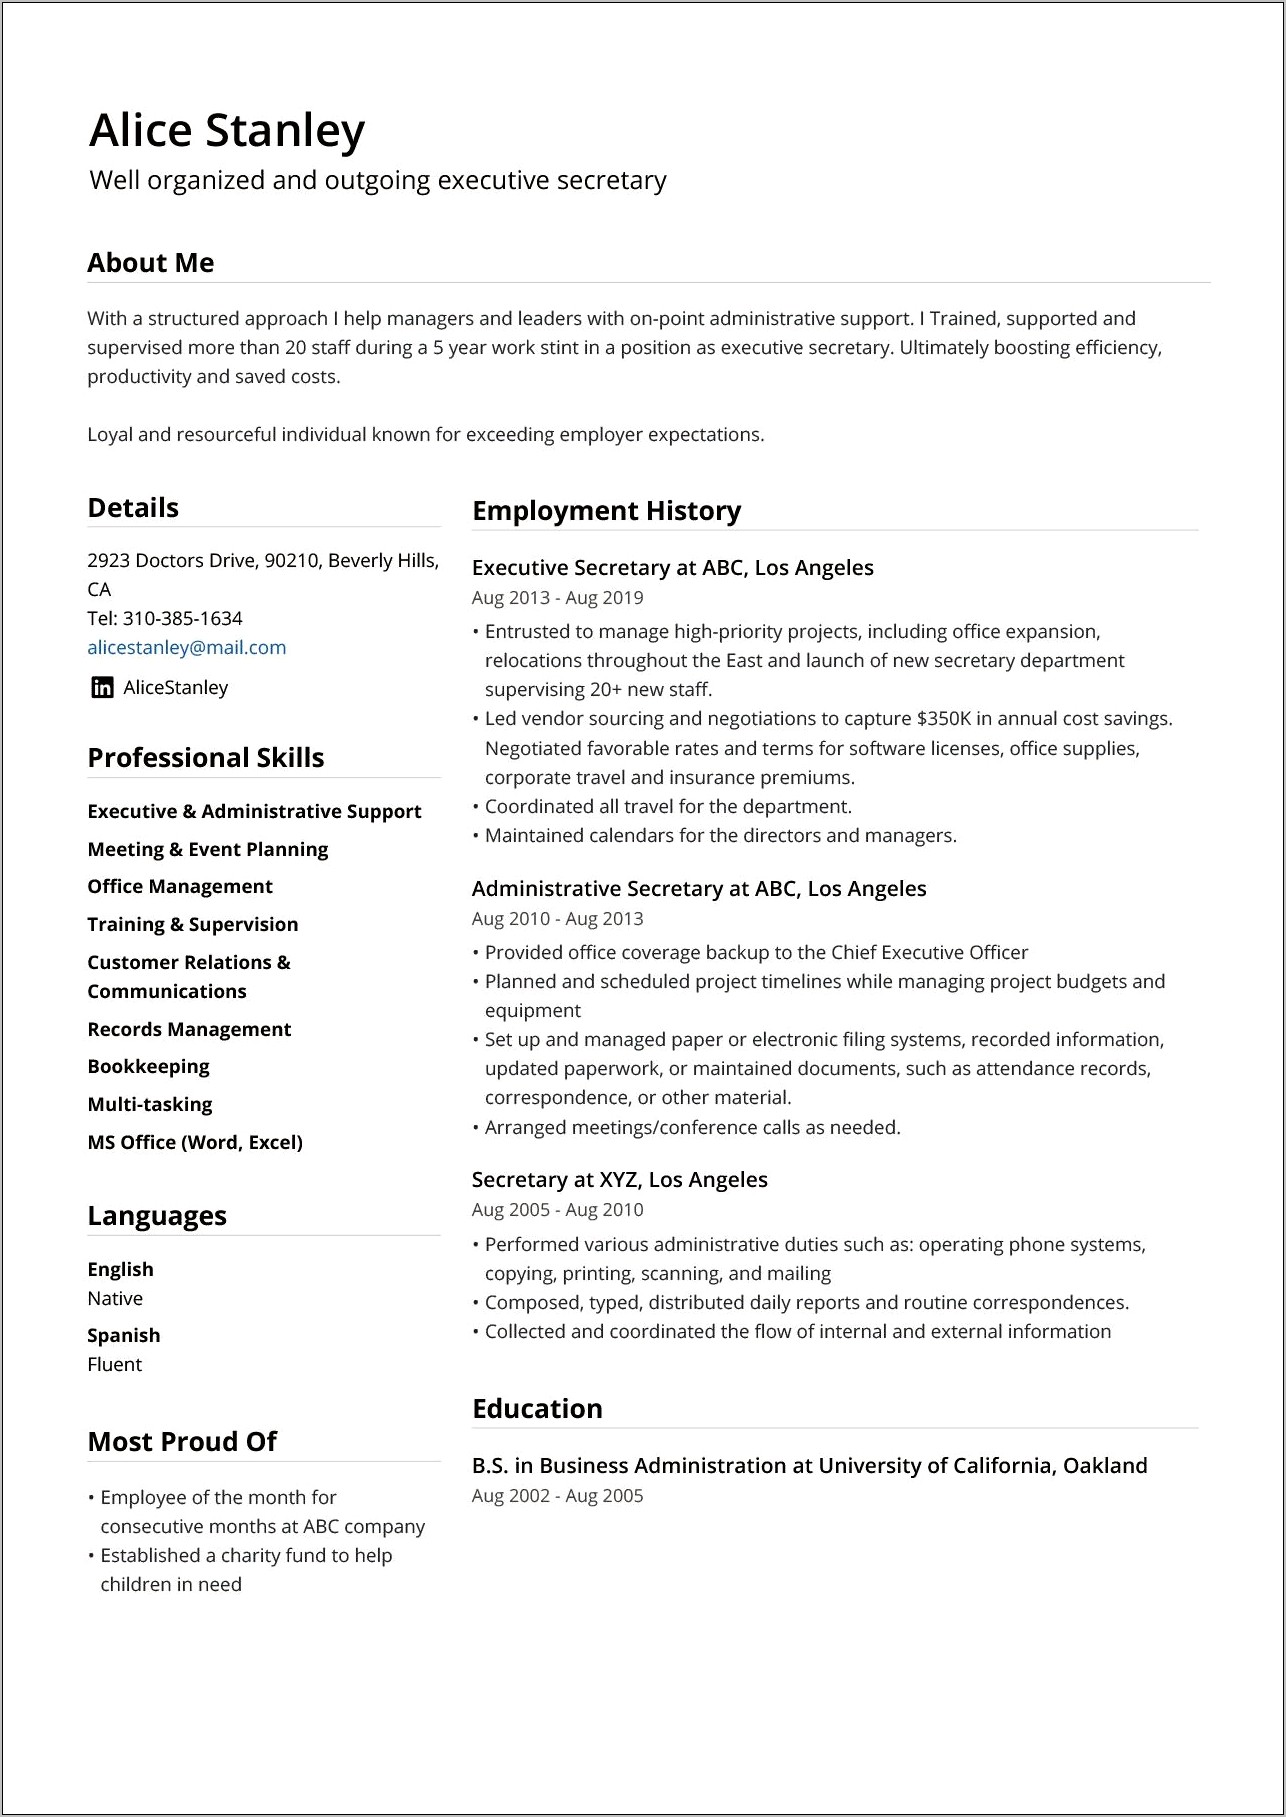 Resume Professional Profile Qualifications Summary Worksheet